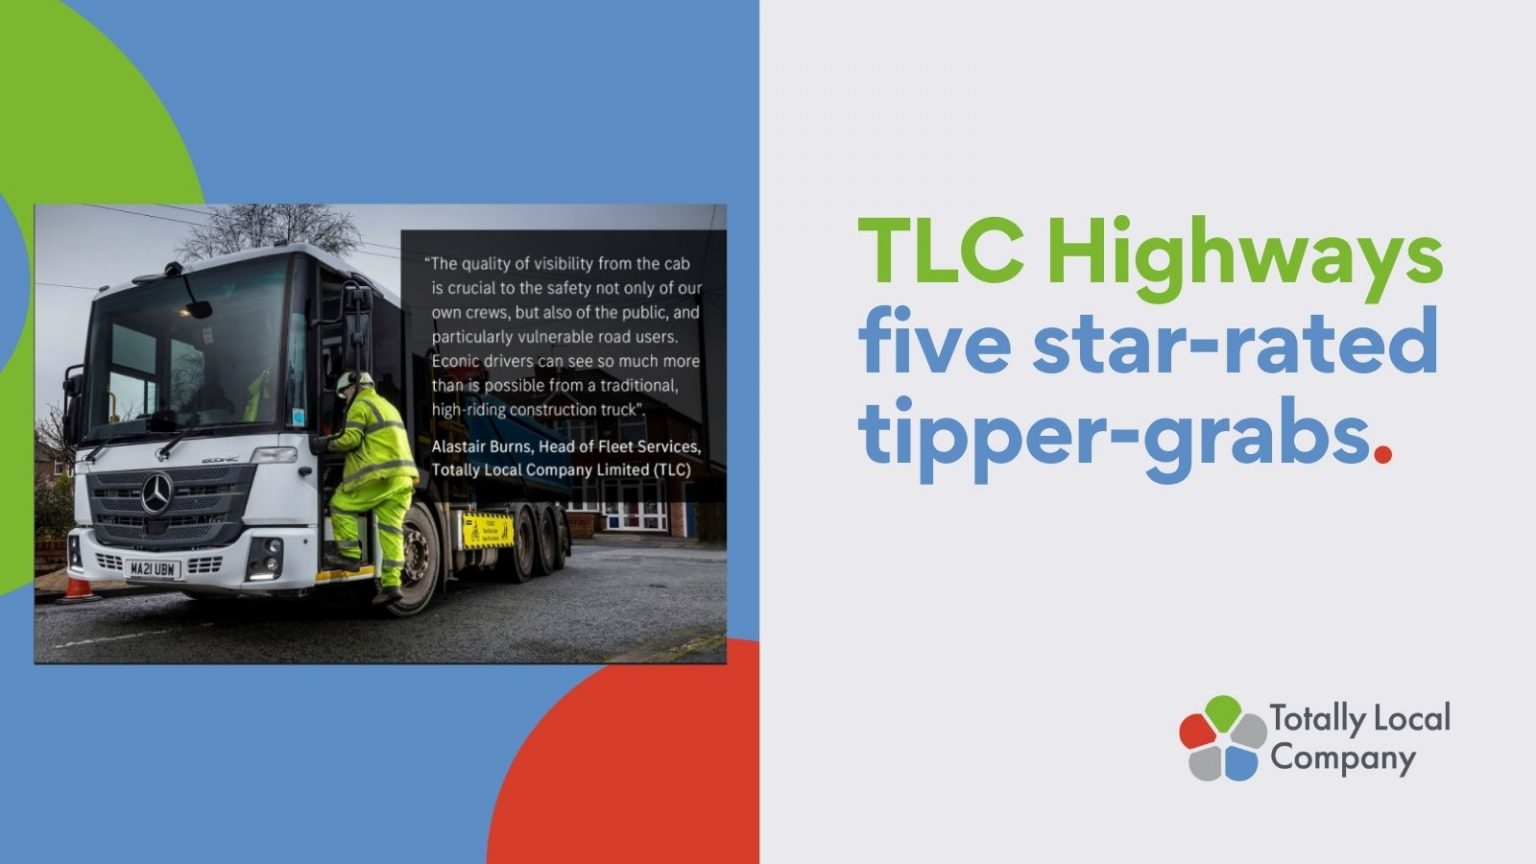 TLC Highways five star-rated tipper-grabs